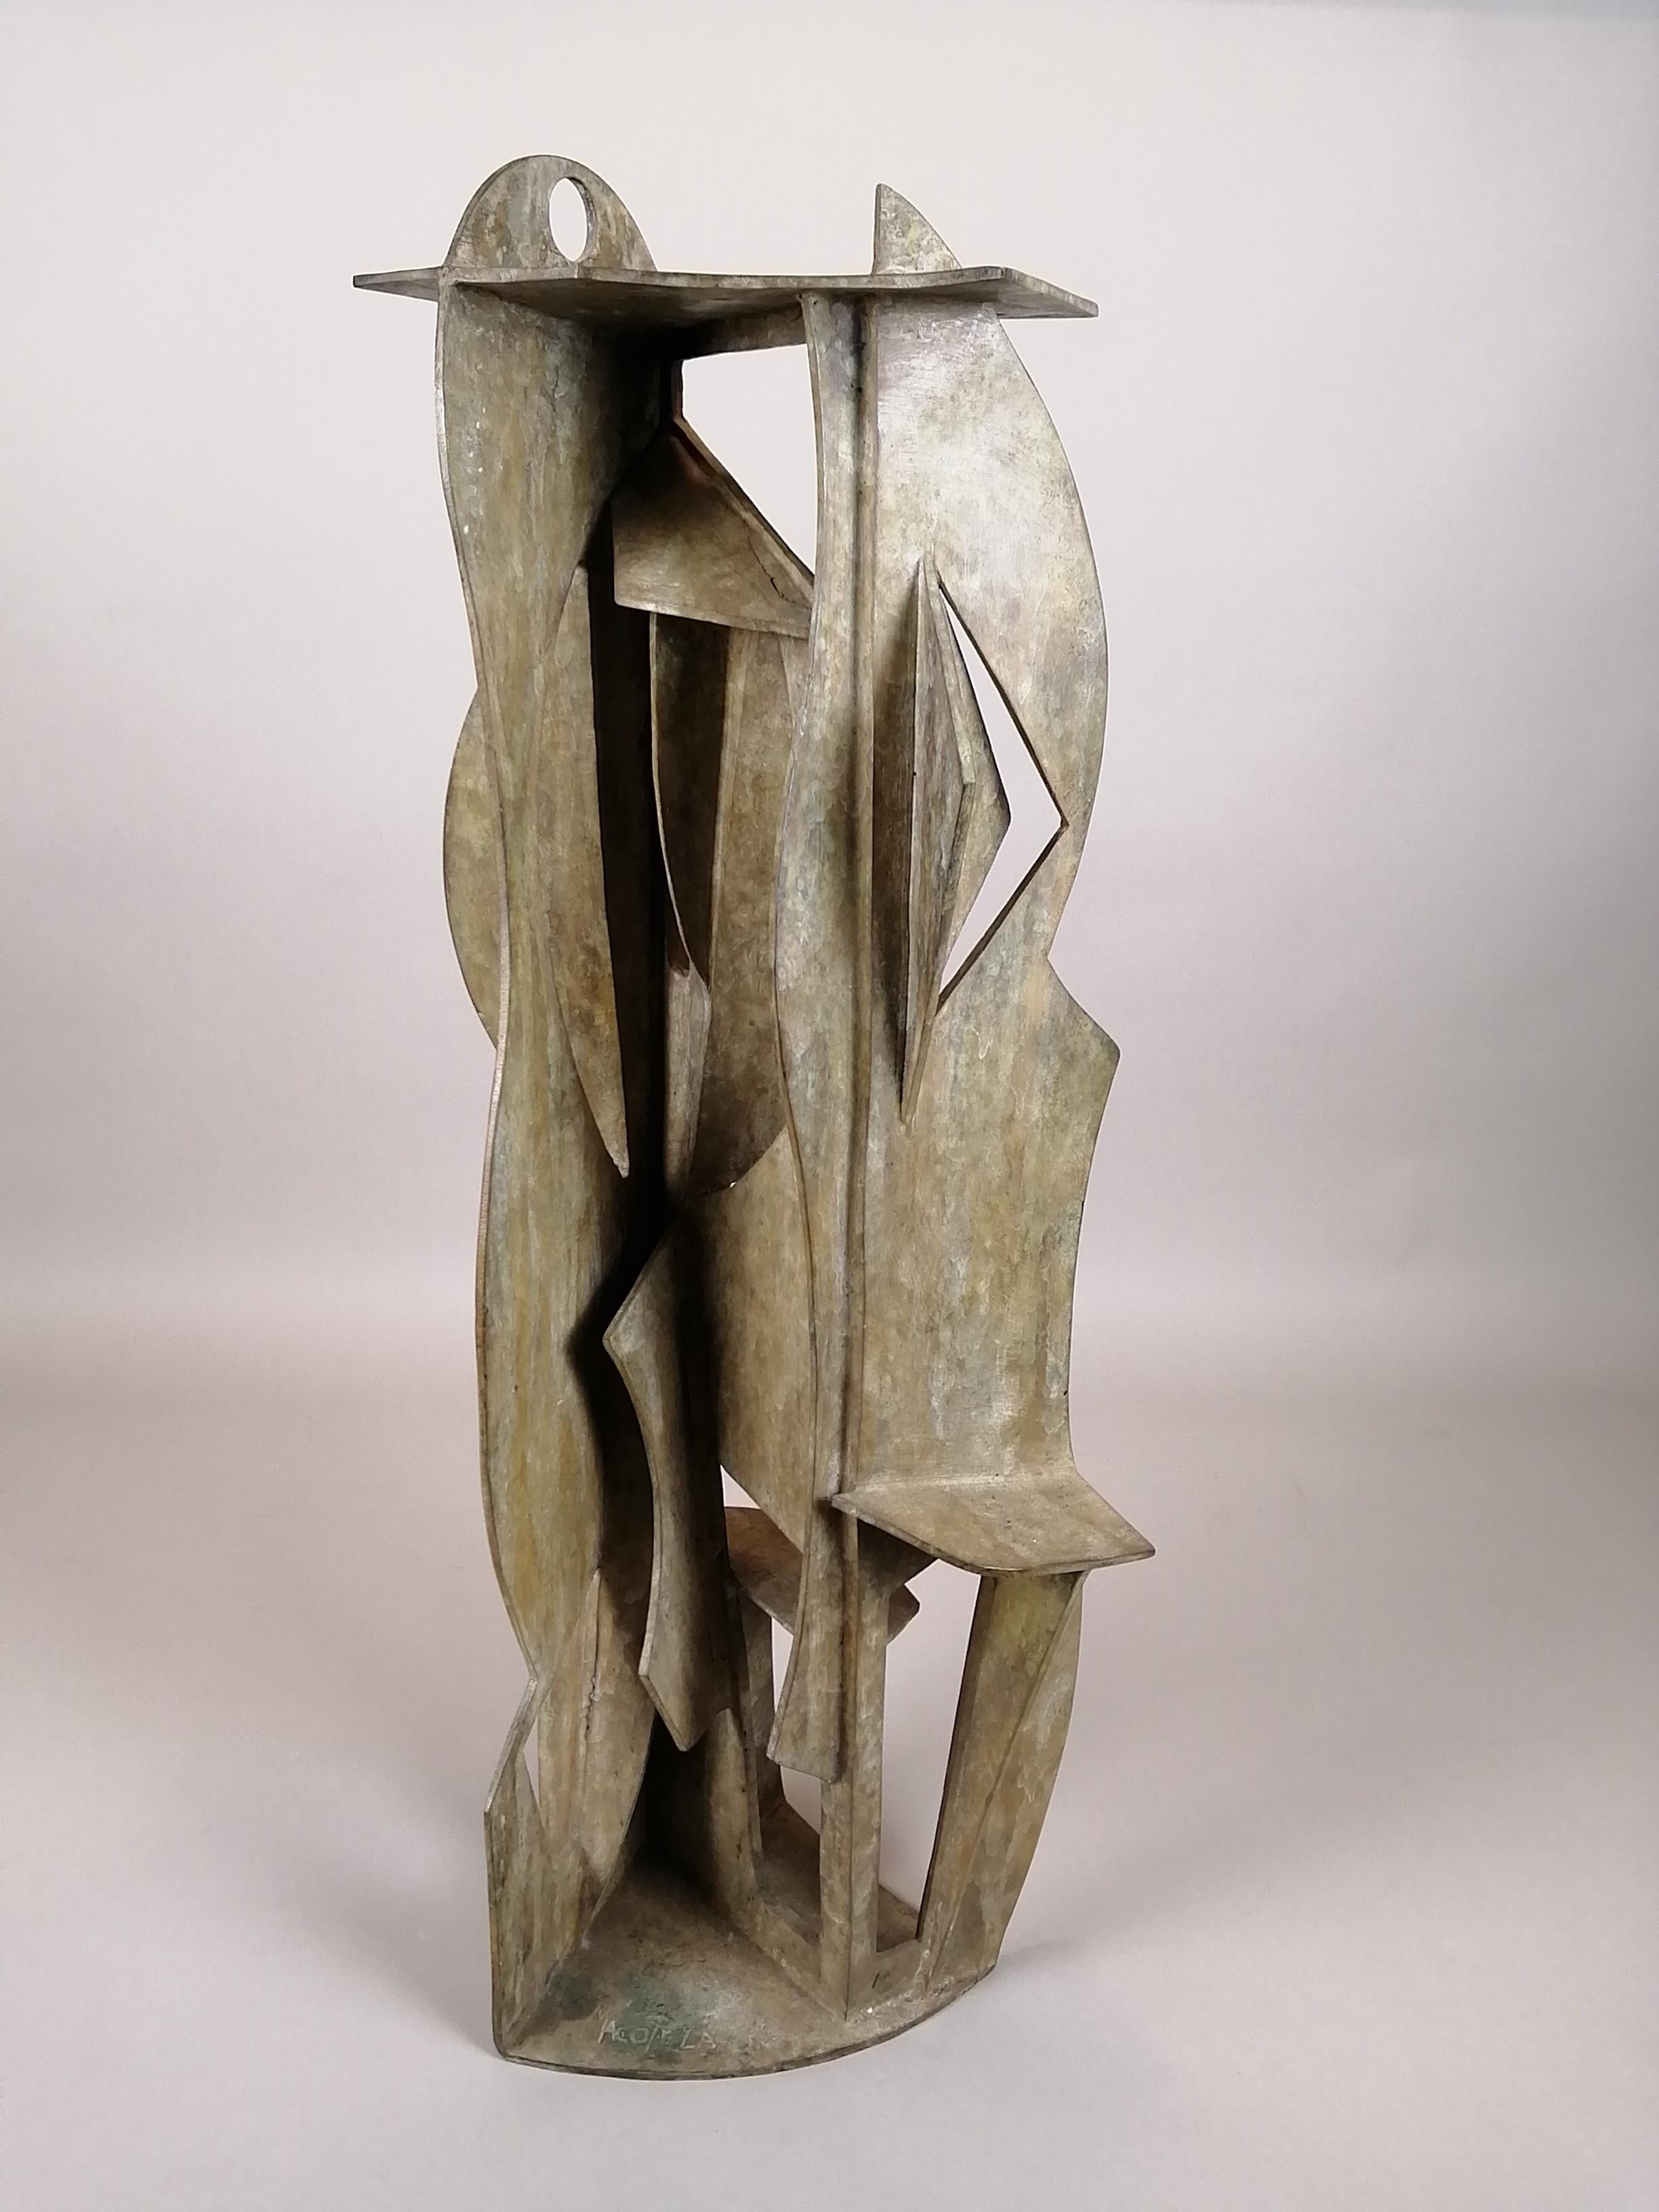 A geometric bronze sculpture by Mexican artist Gabriel Macotela named 